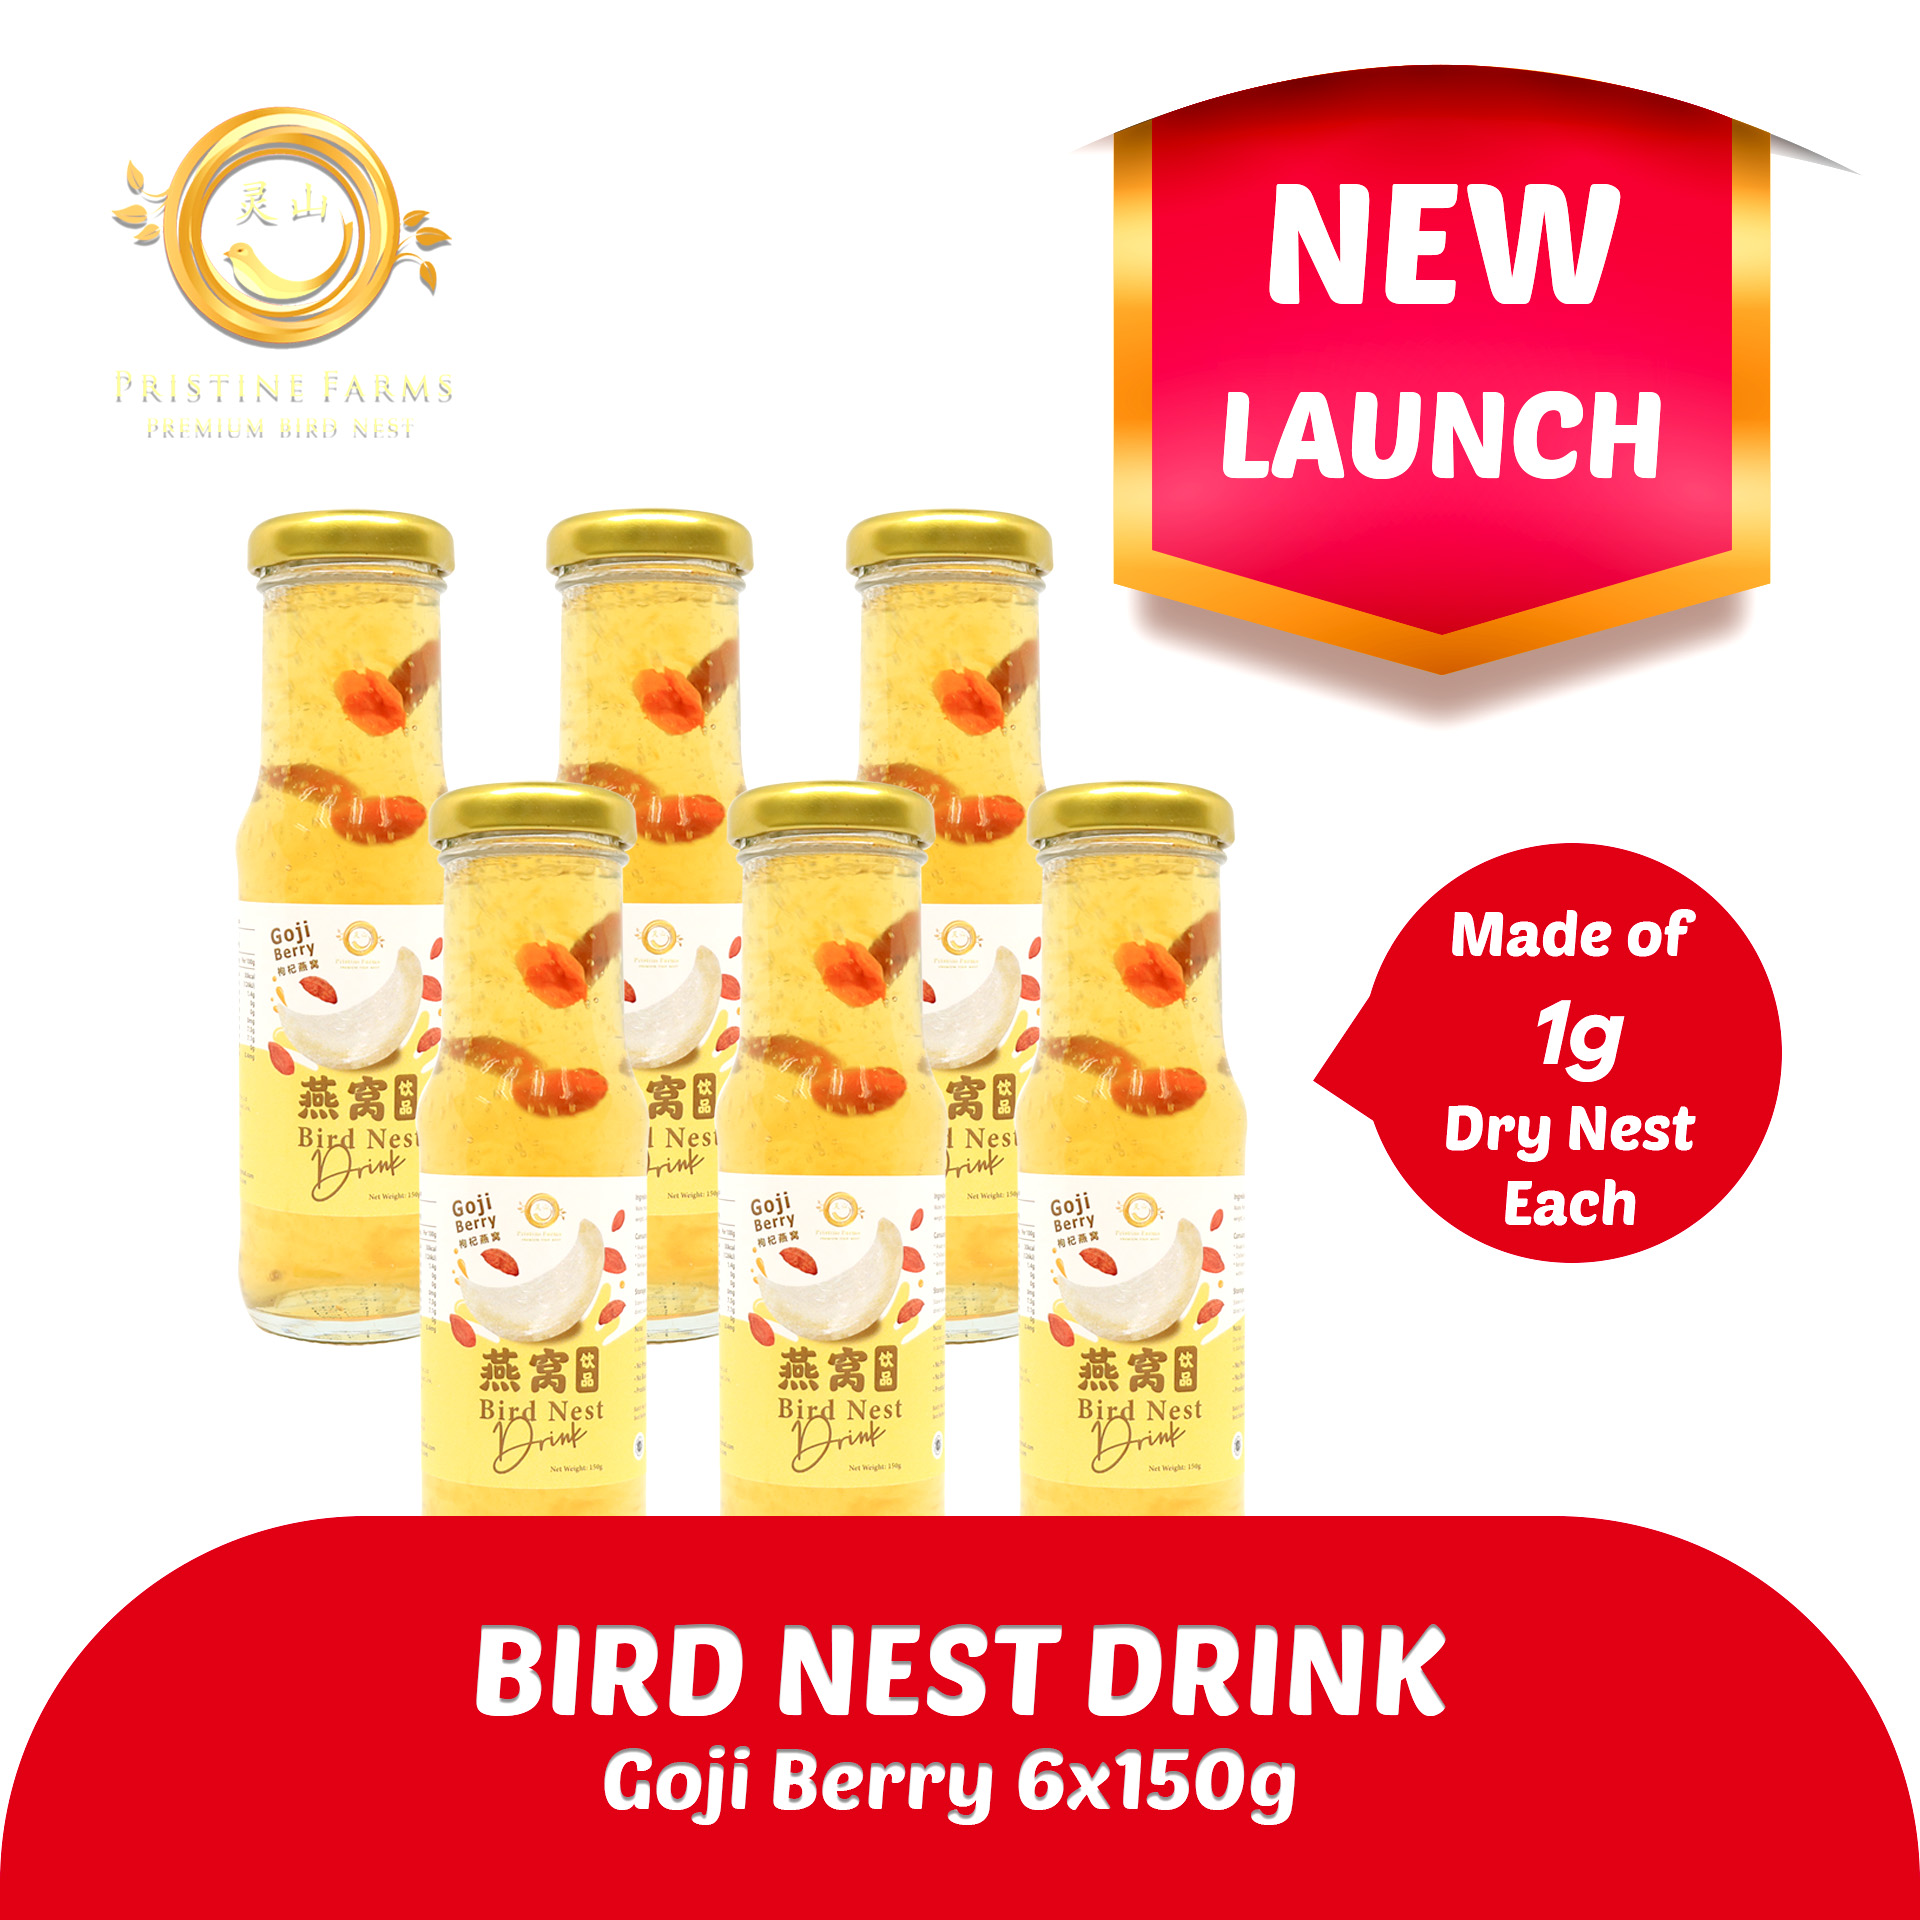 baby-fair Pristine Farm Bird Nest Goji Berry Drink with 1g of Dry Nest - Bundle of 6 x 150g